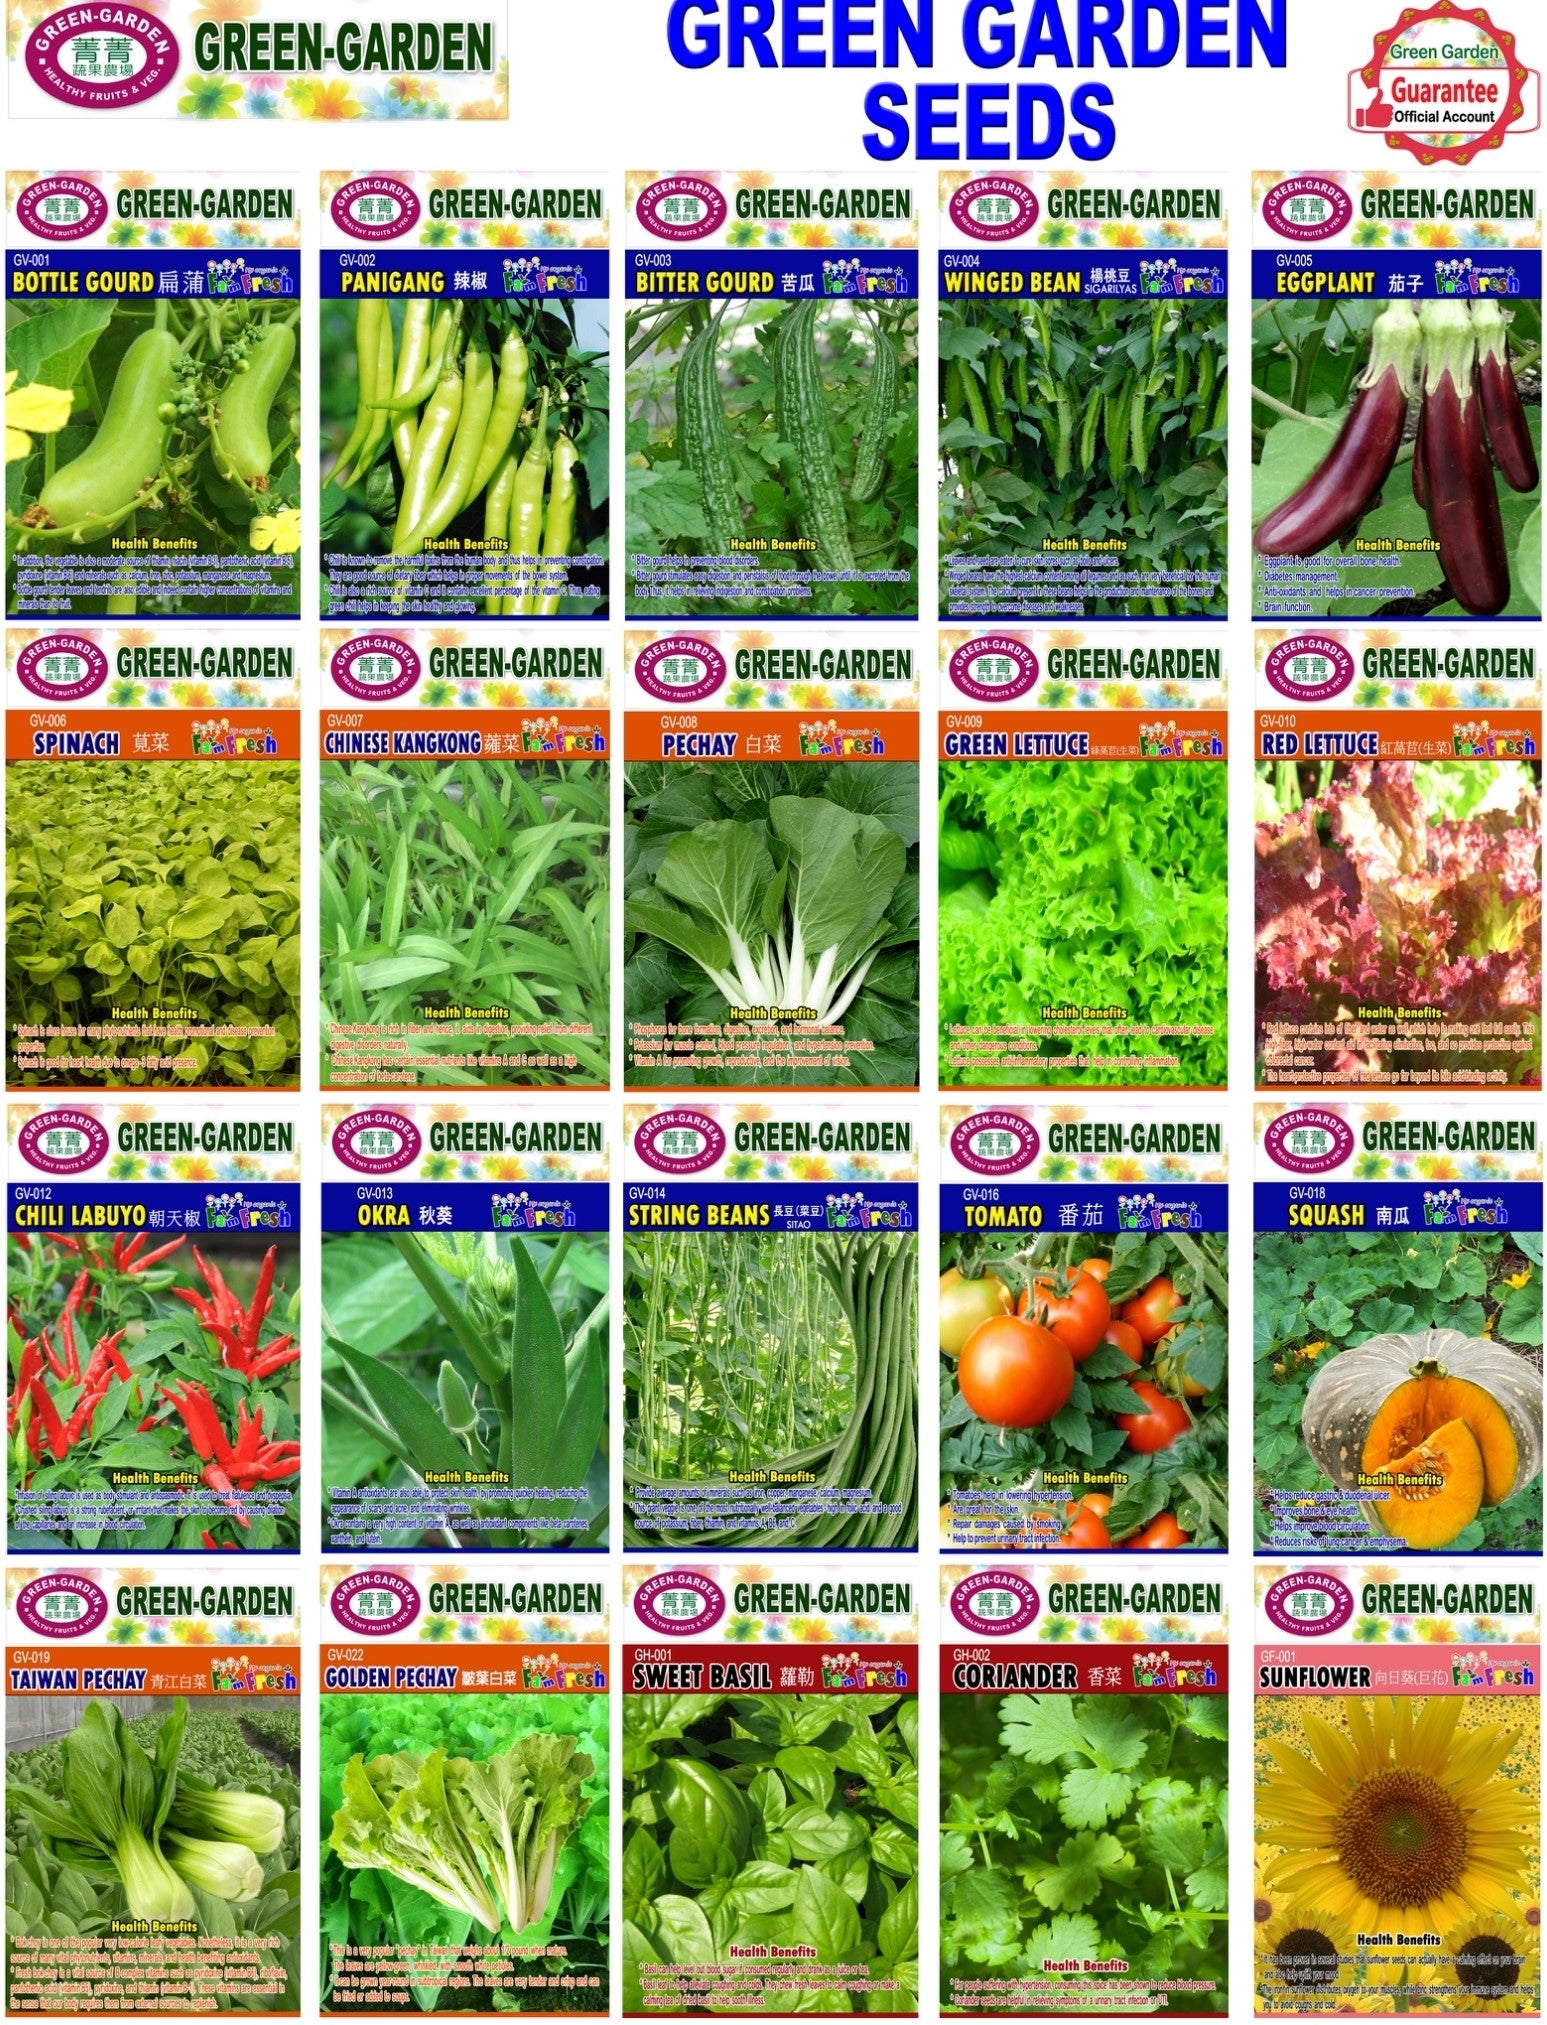 Green Garden Vegetable Seeds (GV-012 Chili Labuyo)